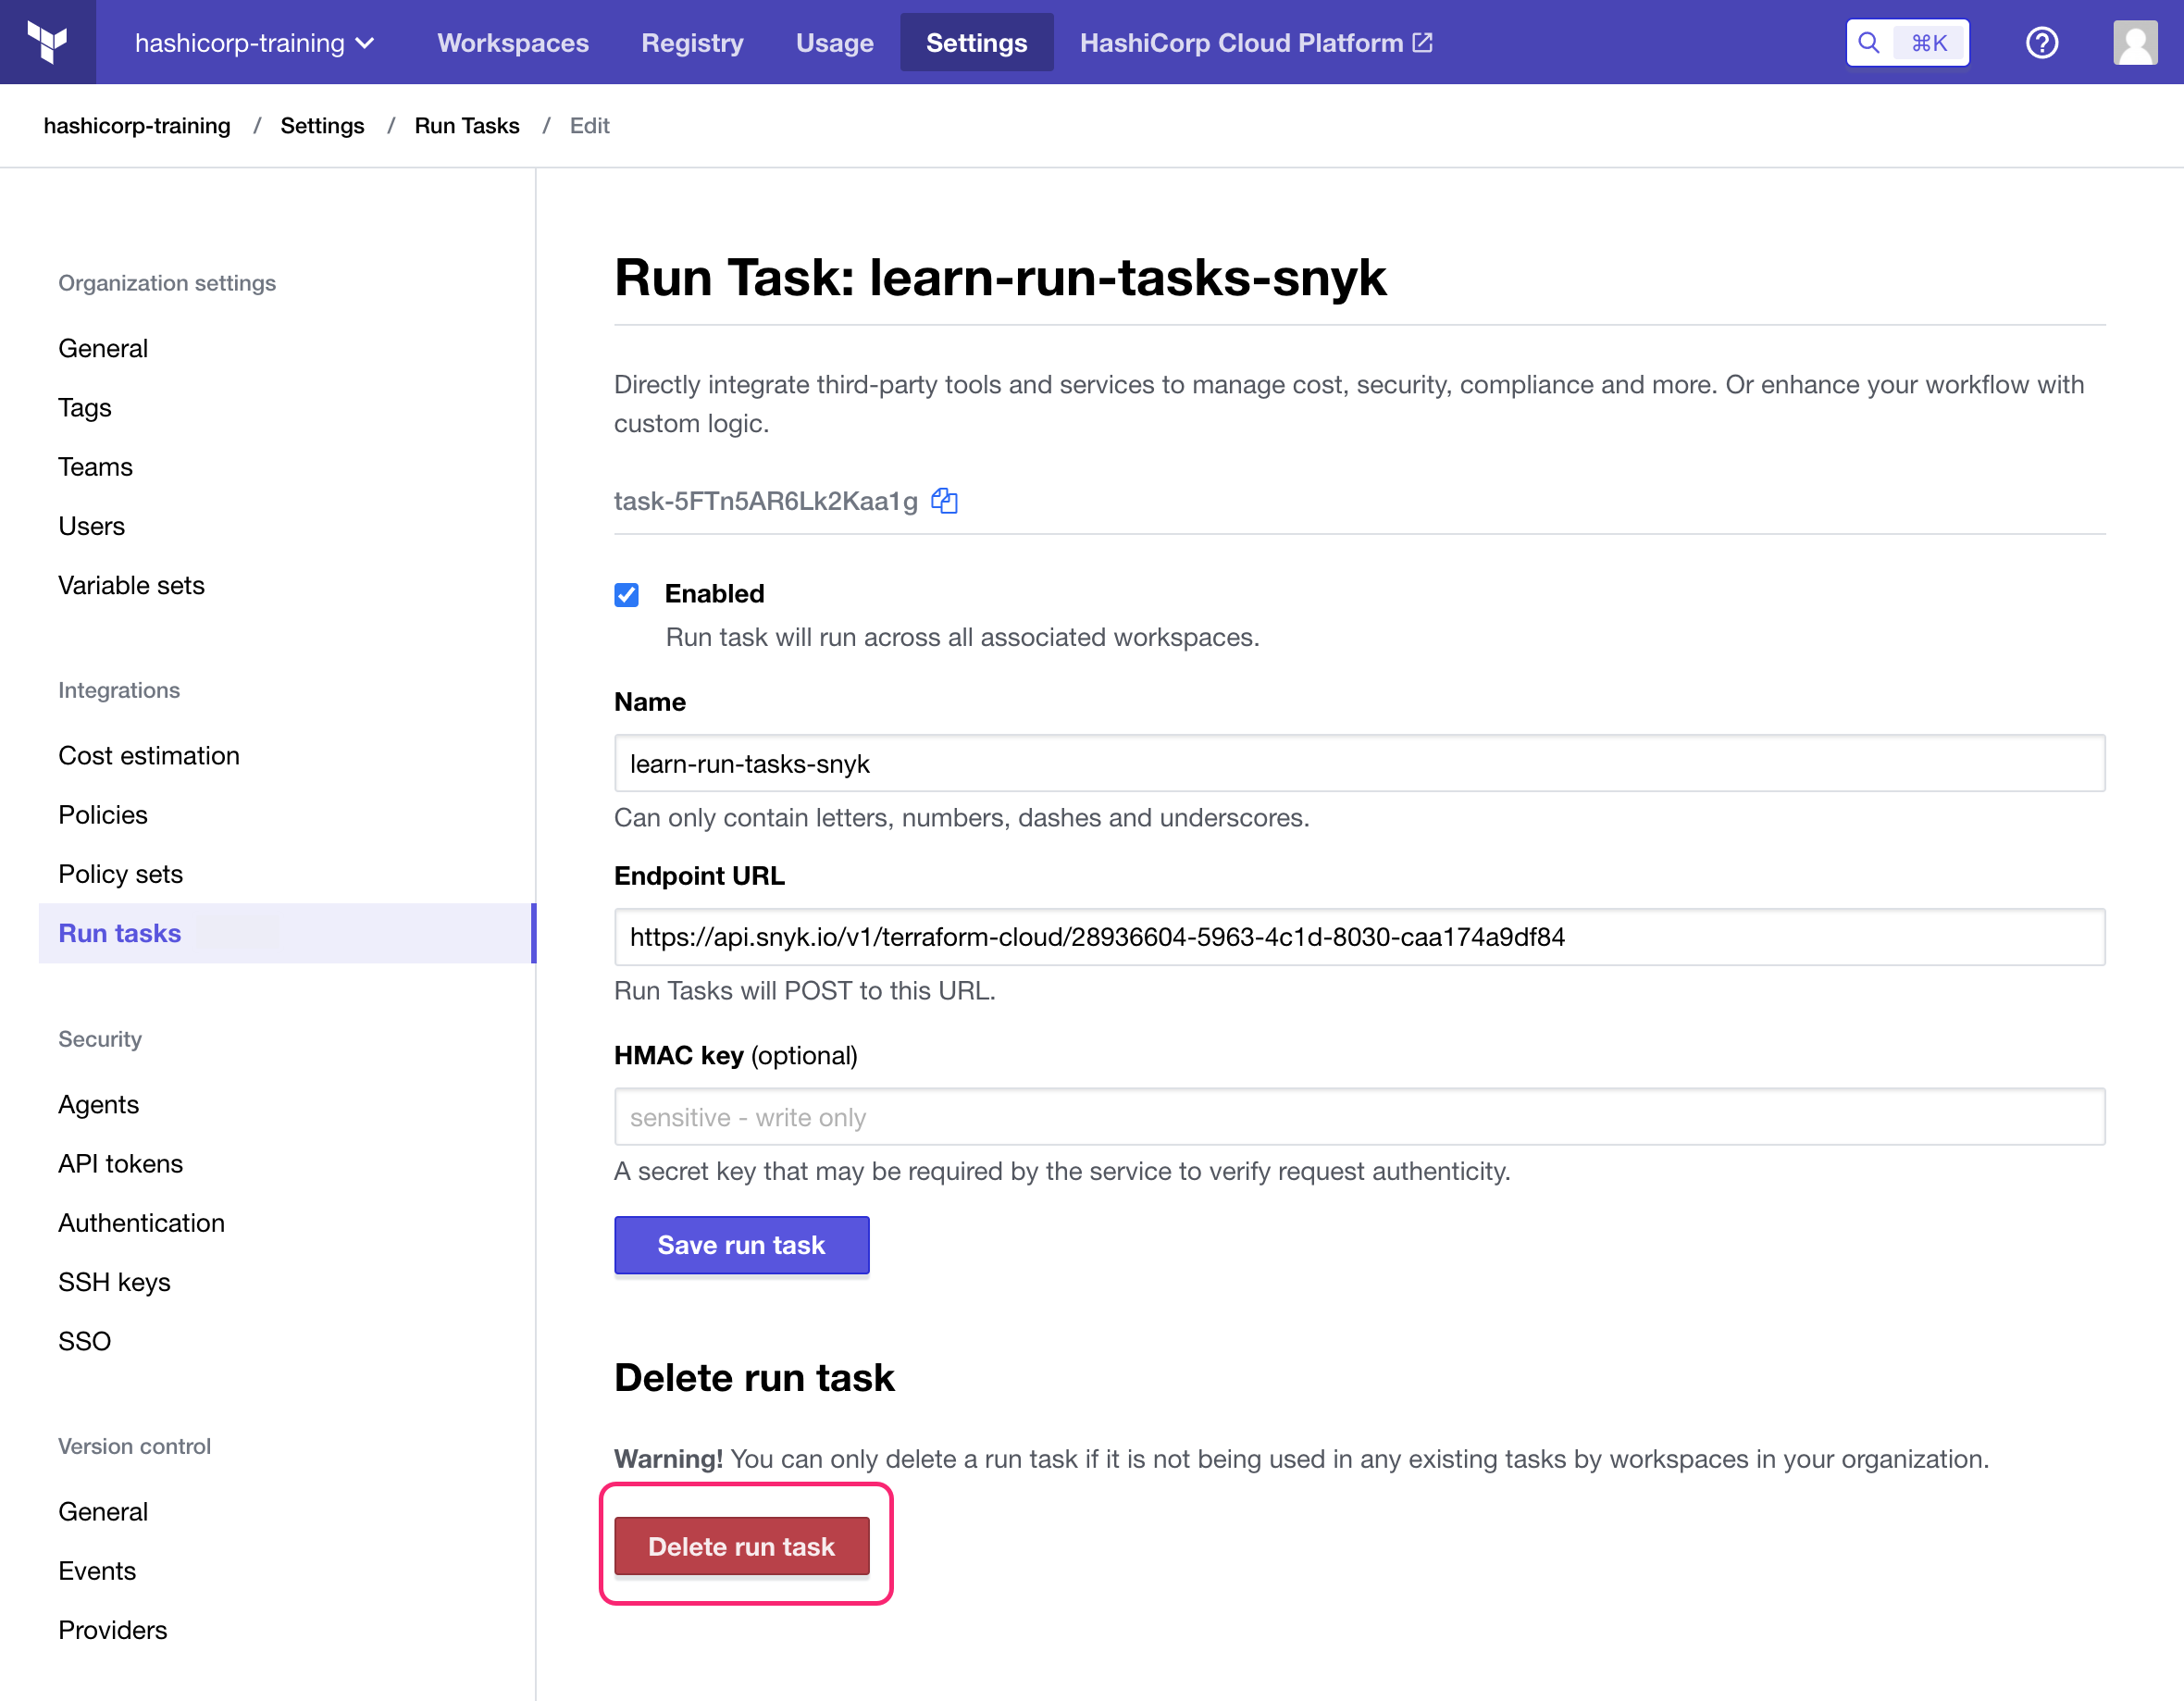 Delete learn-run-tasks-snyk run task